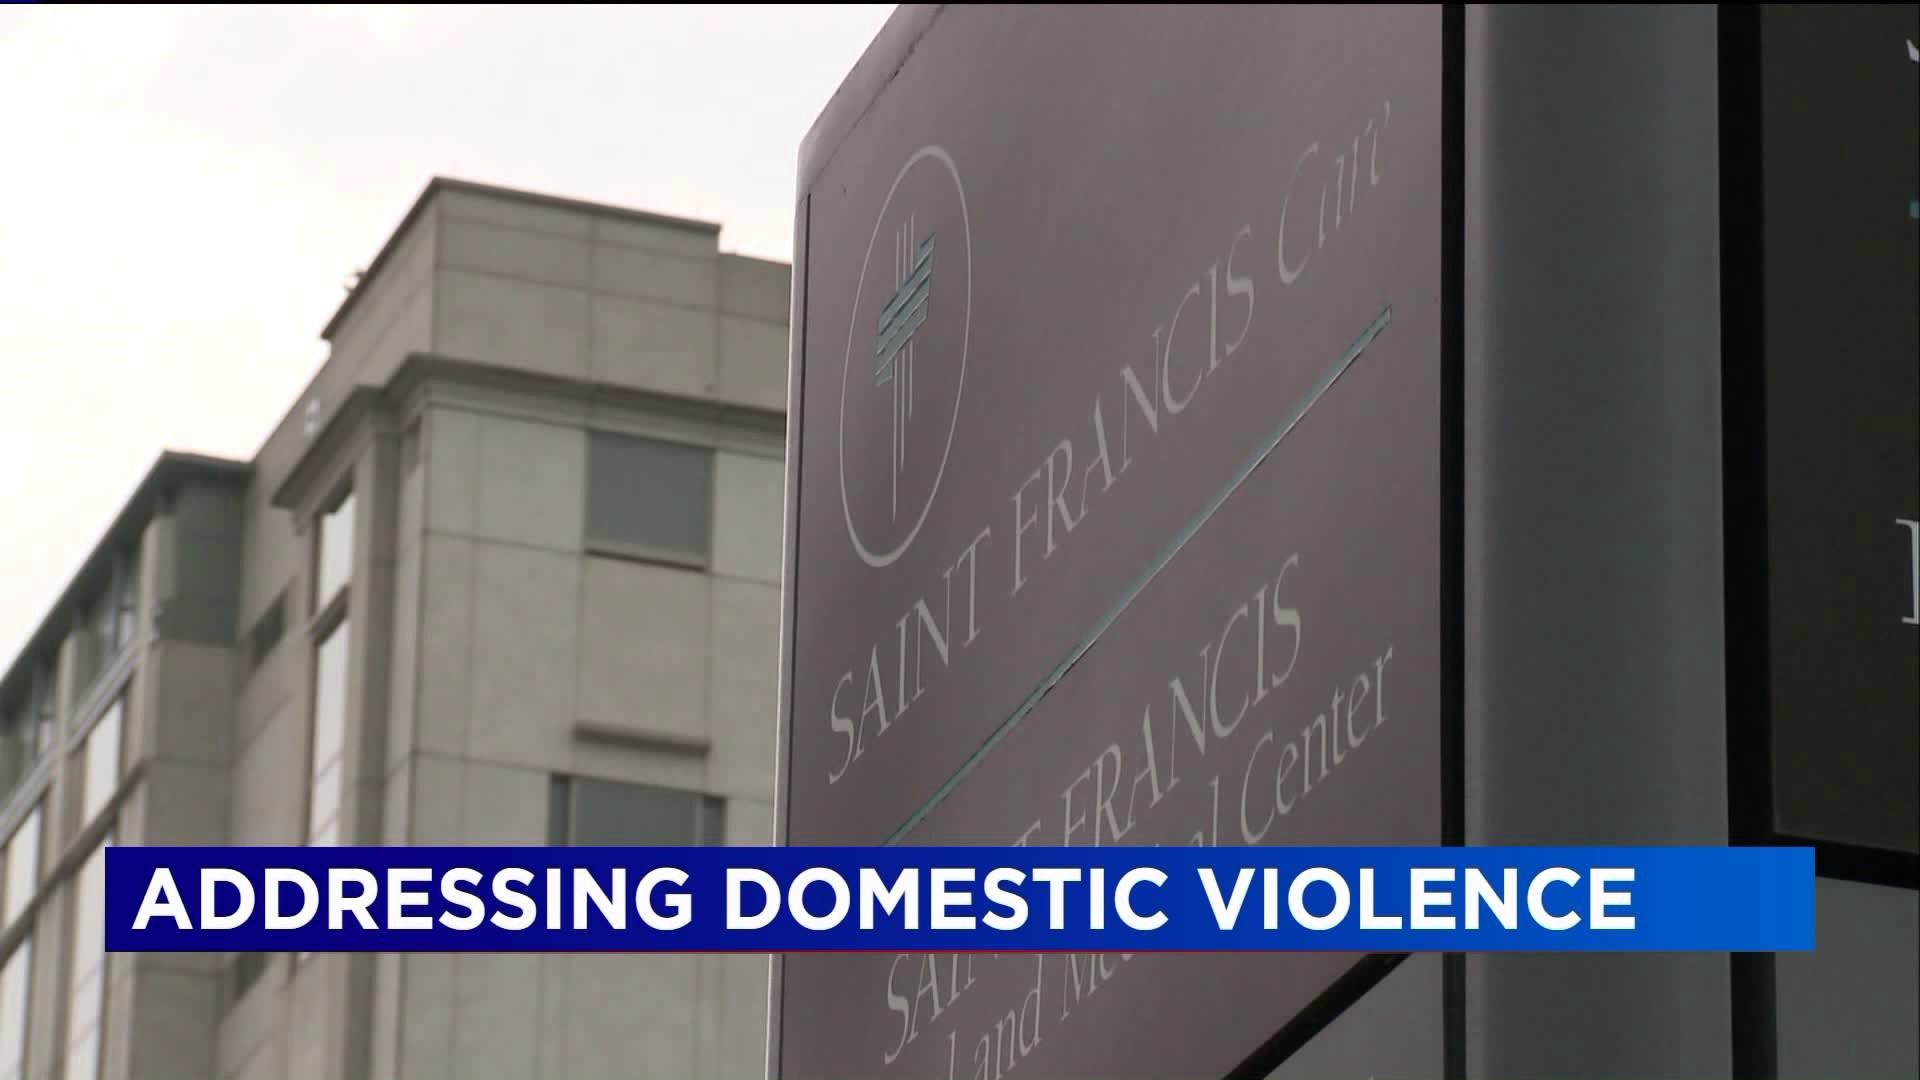 Addressing Domestic Violence